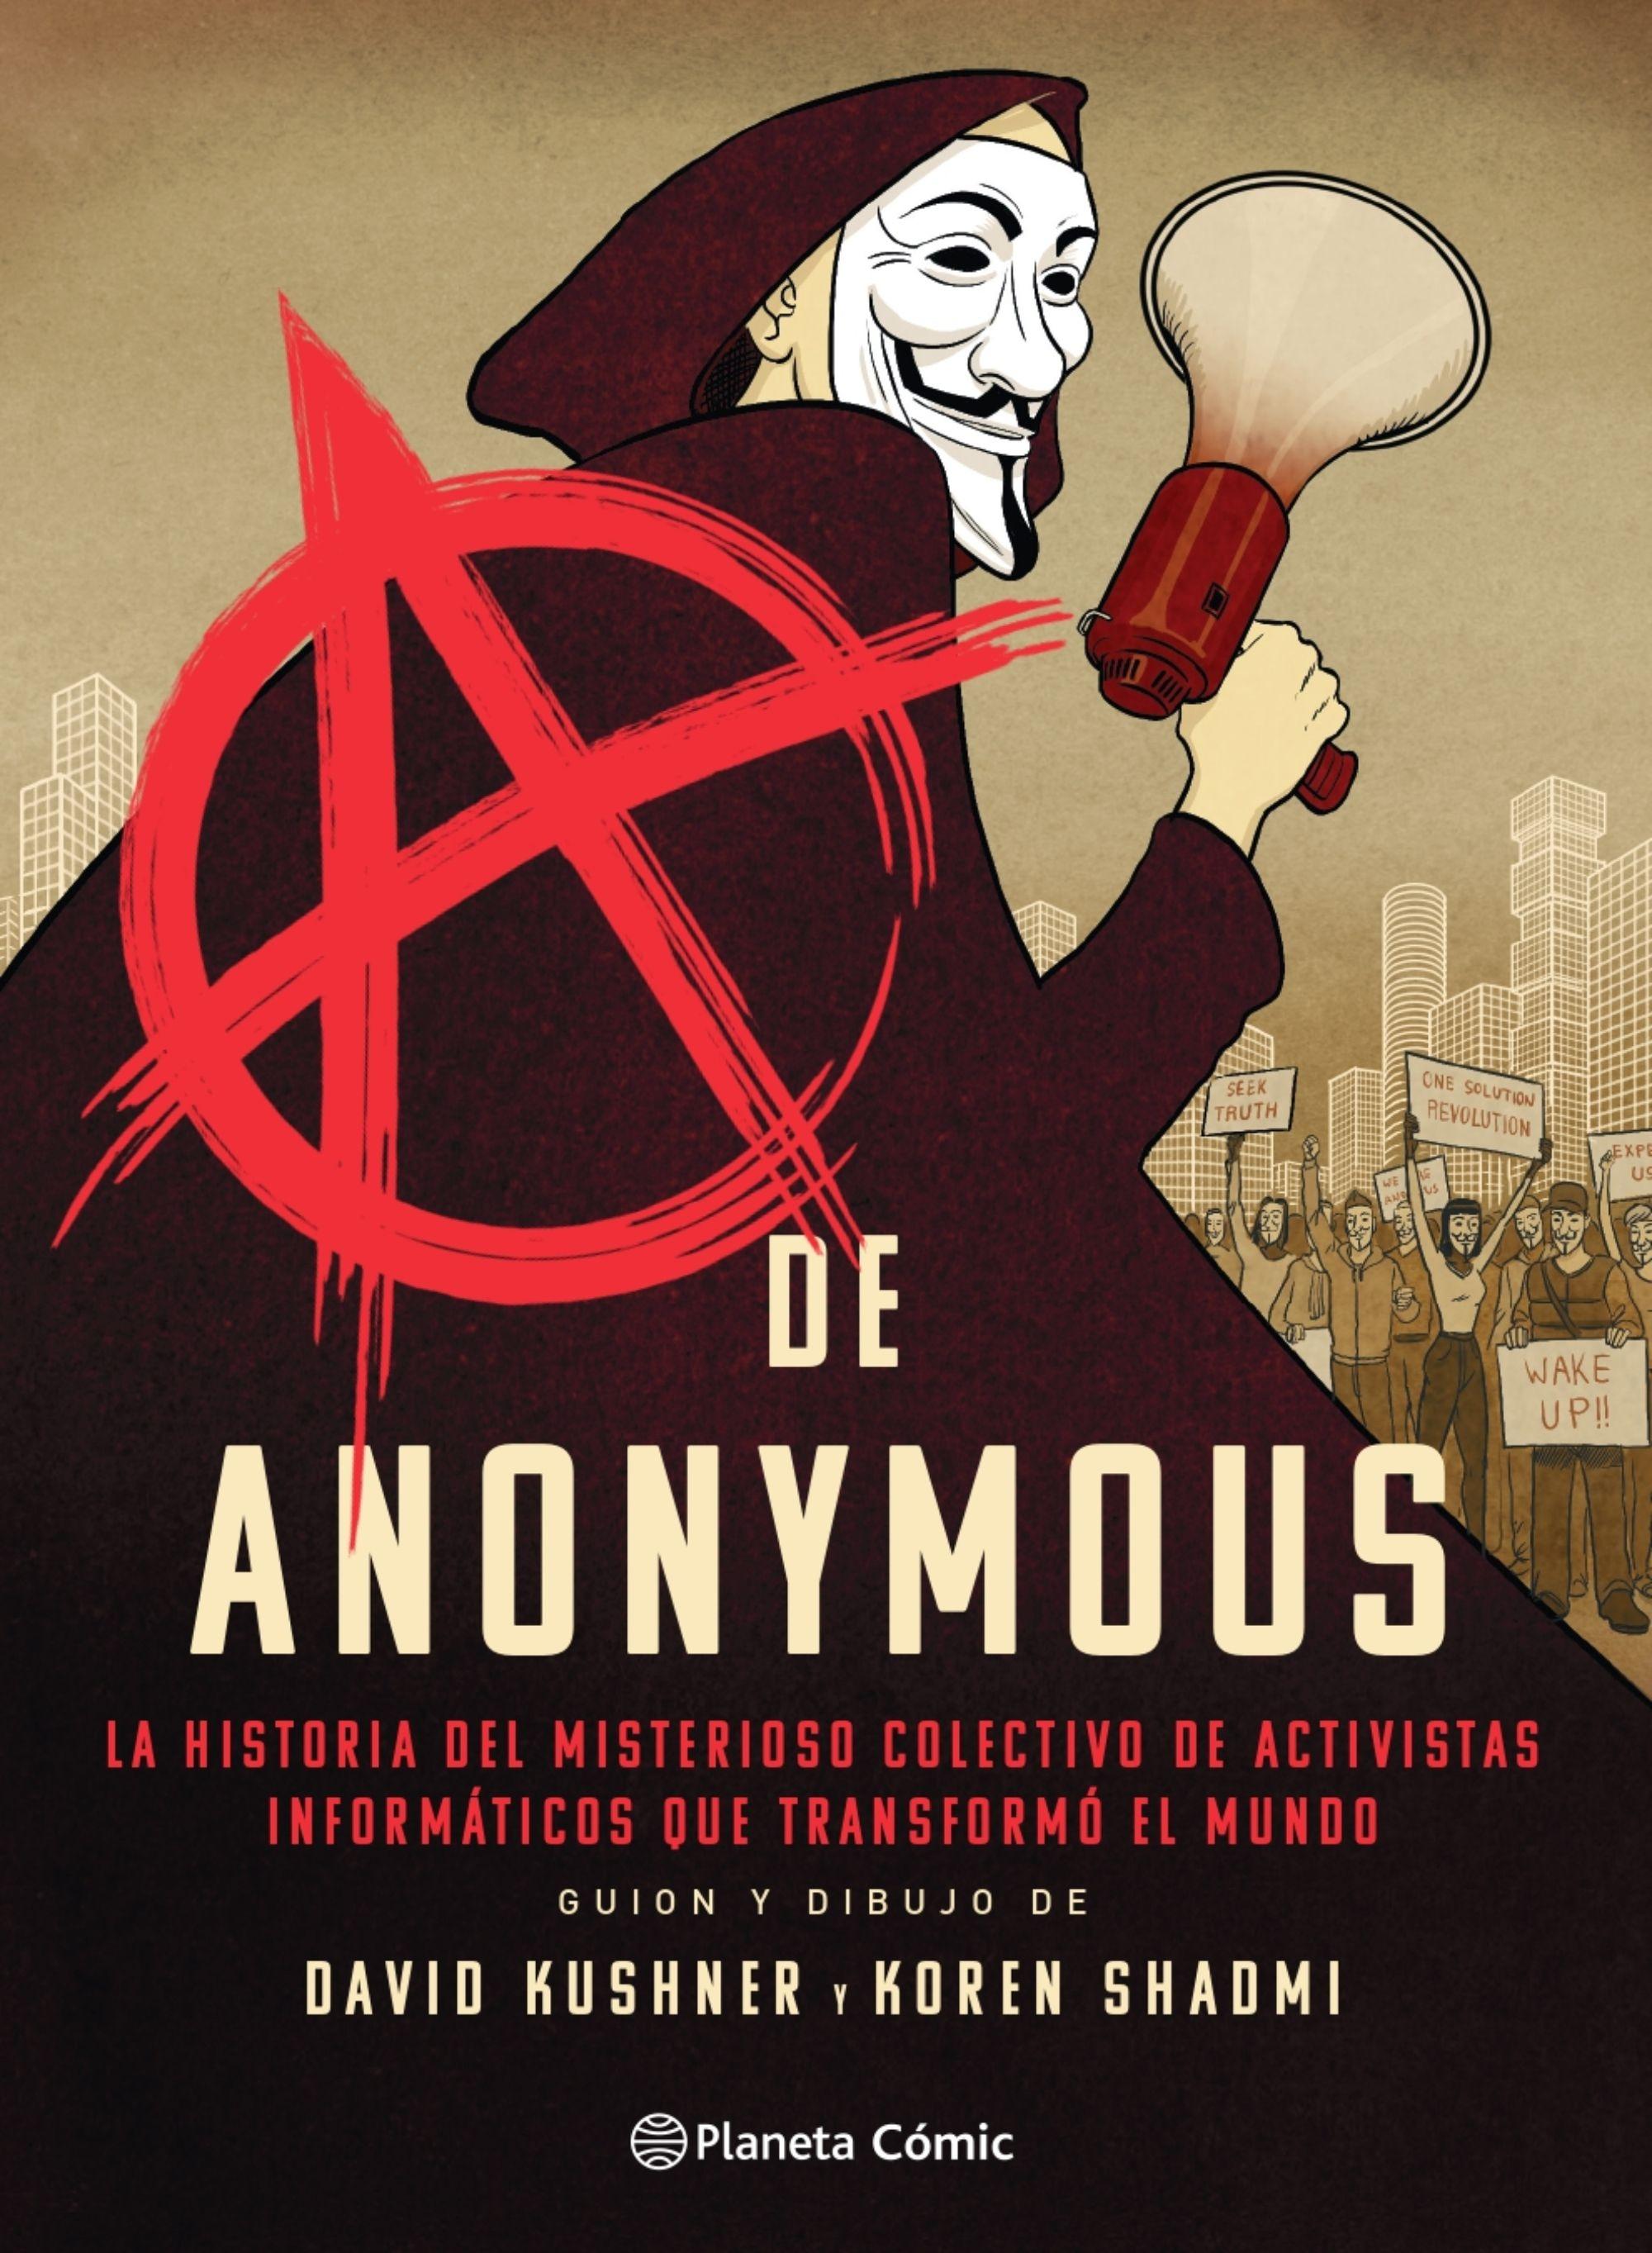 A de Anonymous (novela gráfica) "La historia del misterioso colectivo de activistas informáticos que tran". 